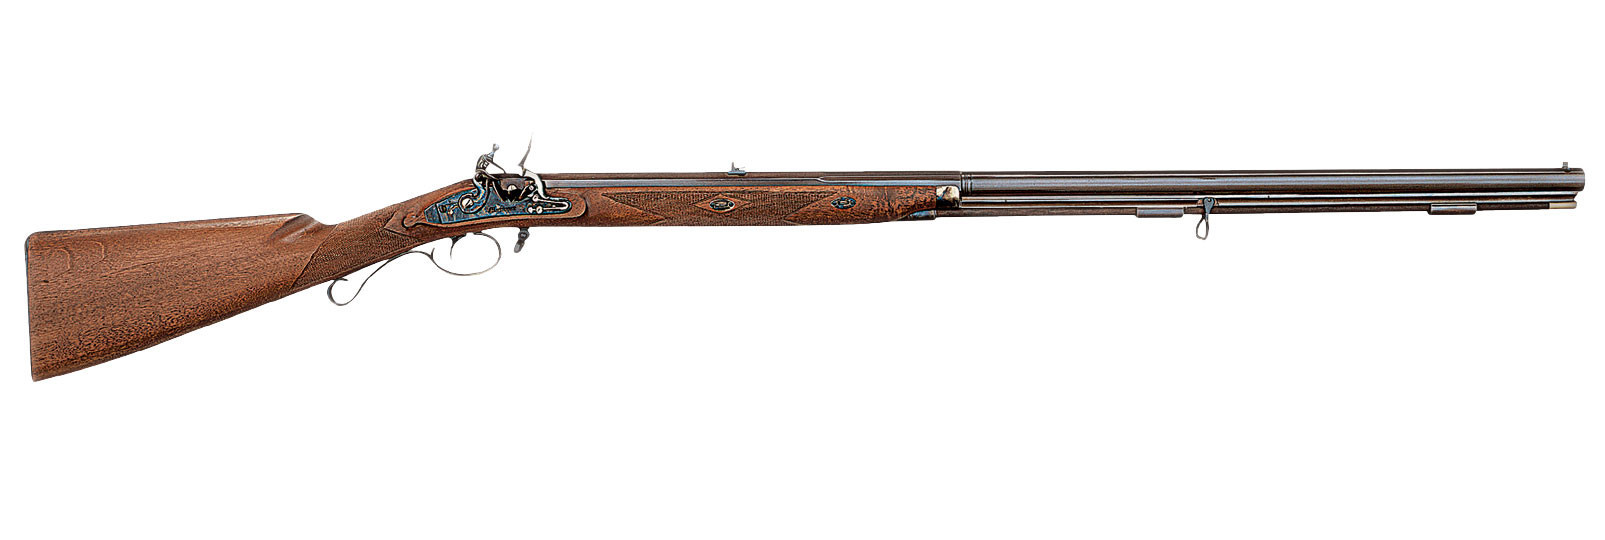 Mortimer Rifle flintlock model